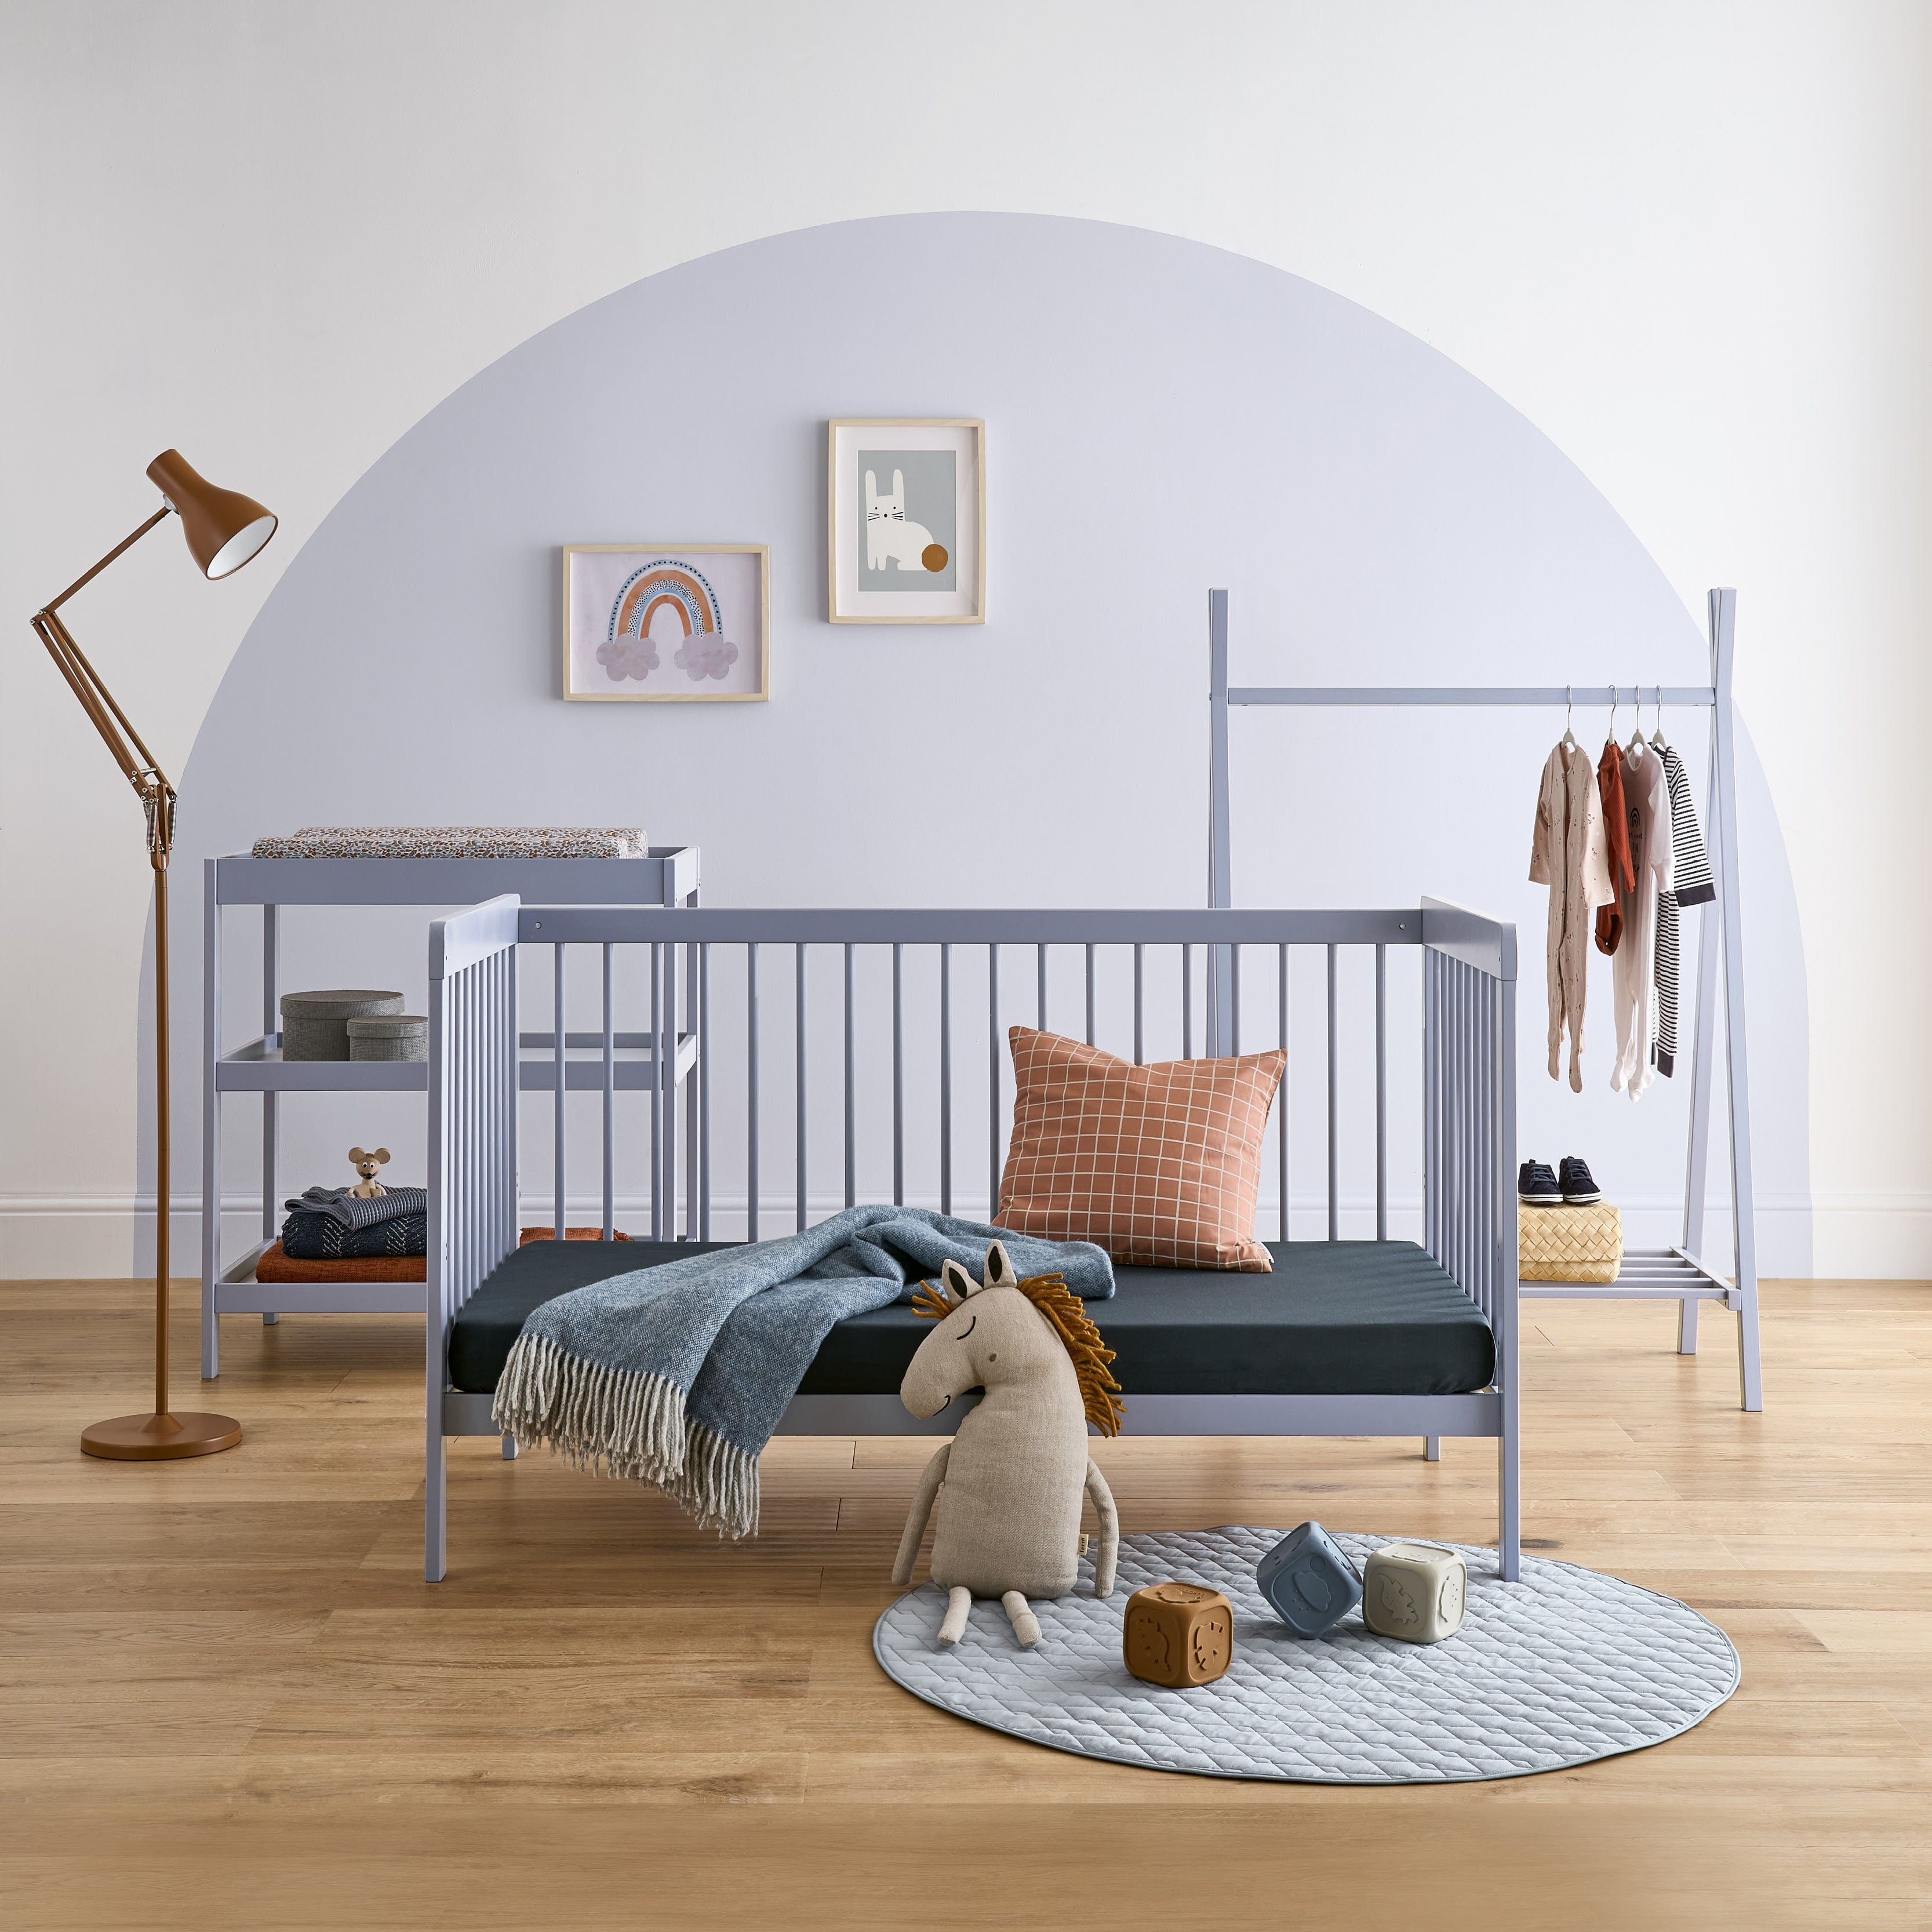 CuddleCo Nursery Room Sets CuddleCo Nola 3 Piece Room Set - Flint Blue